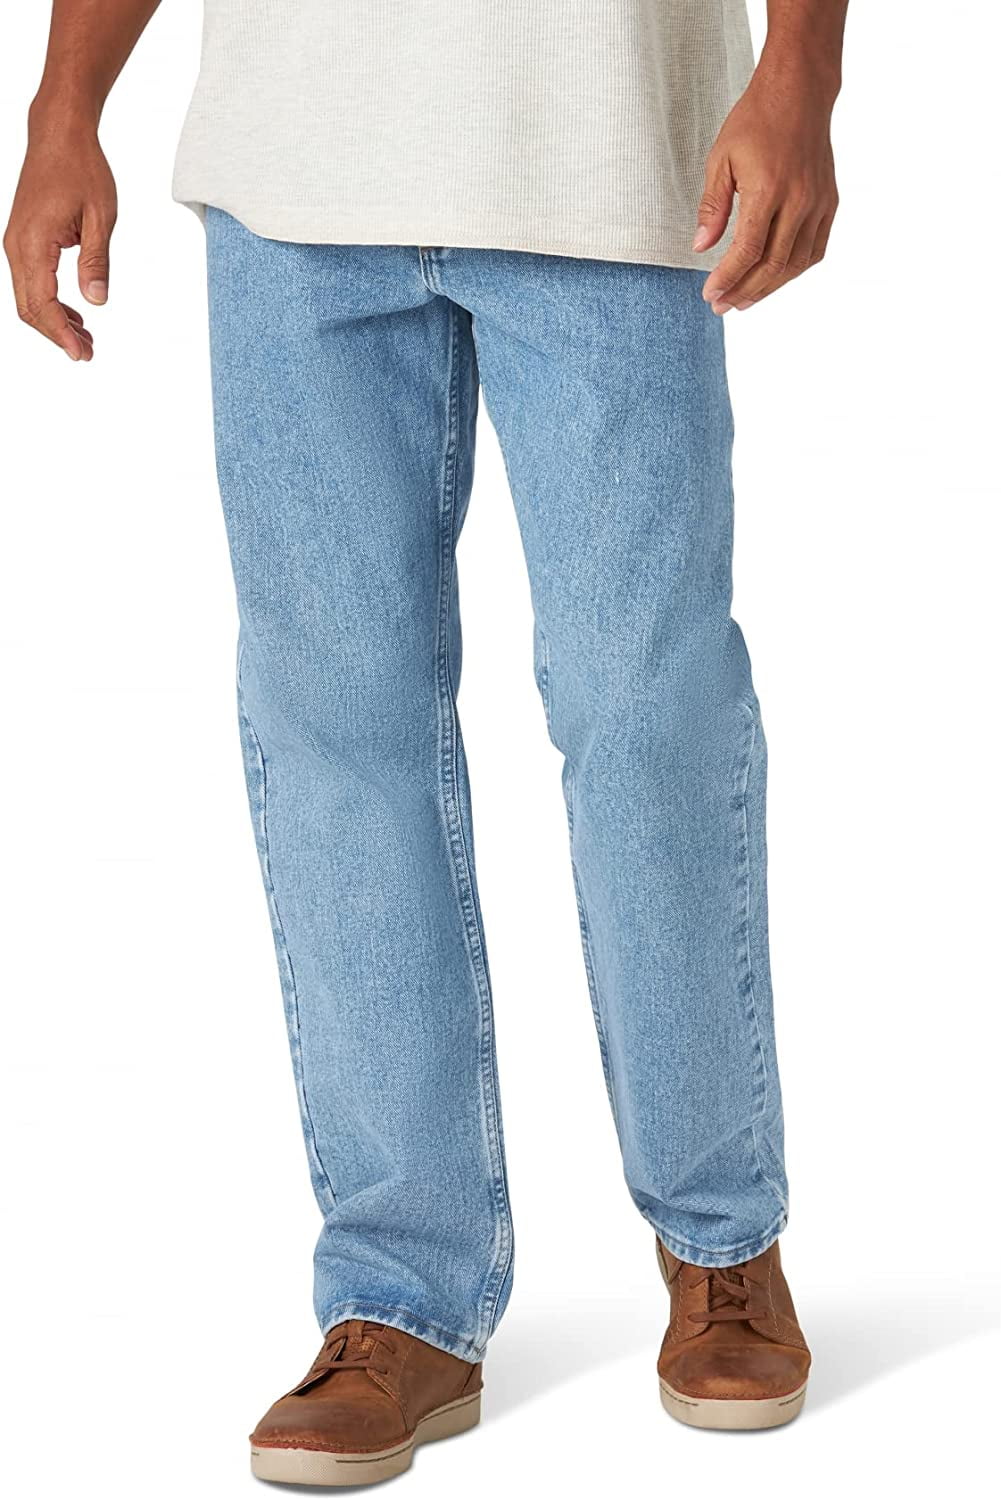 Wrangler Authentics Men's Classic 5-Pocket Cotton Relaxed Fit Jean 44W ...